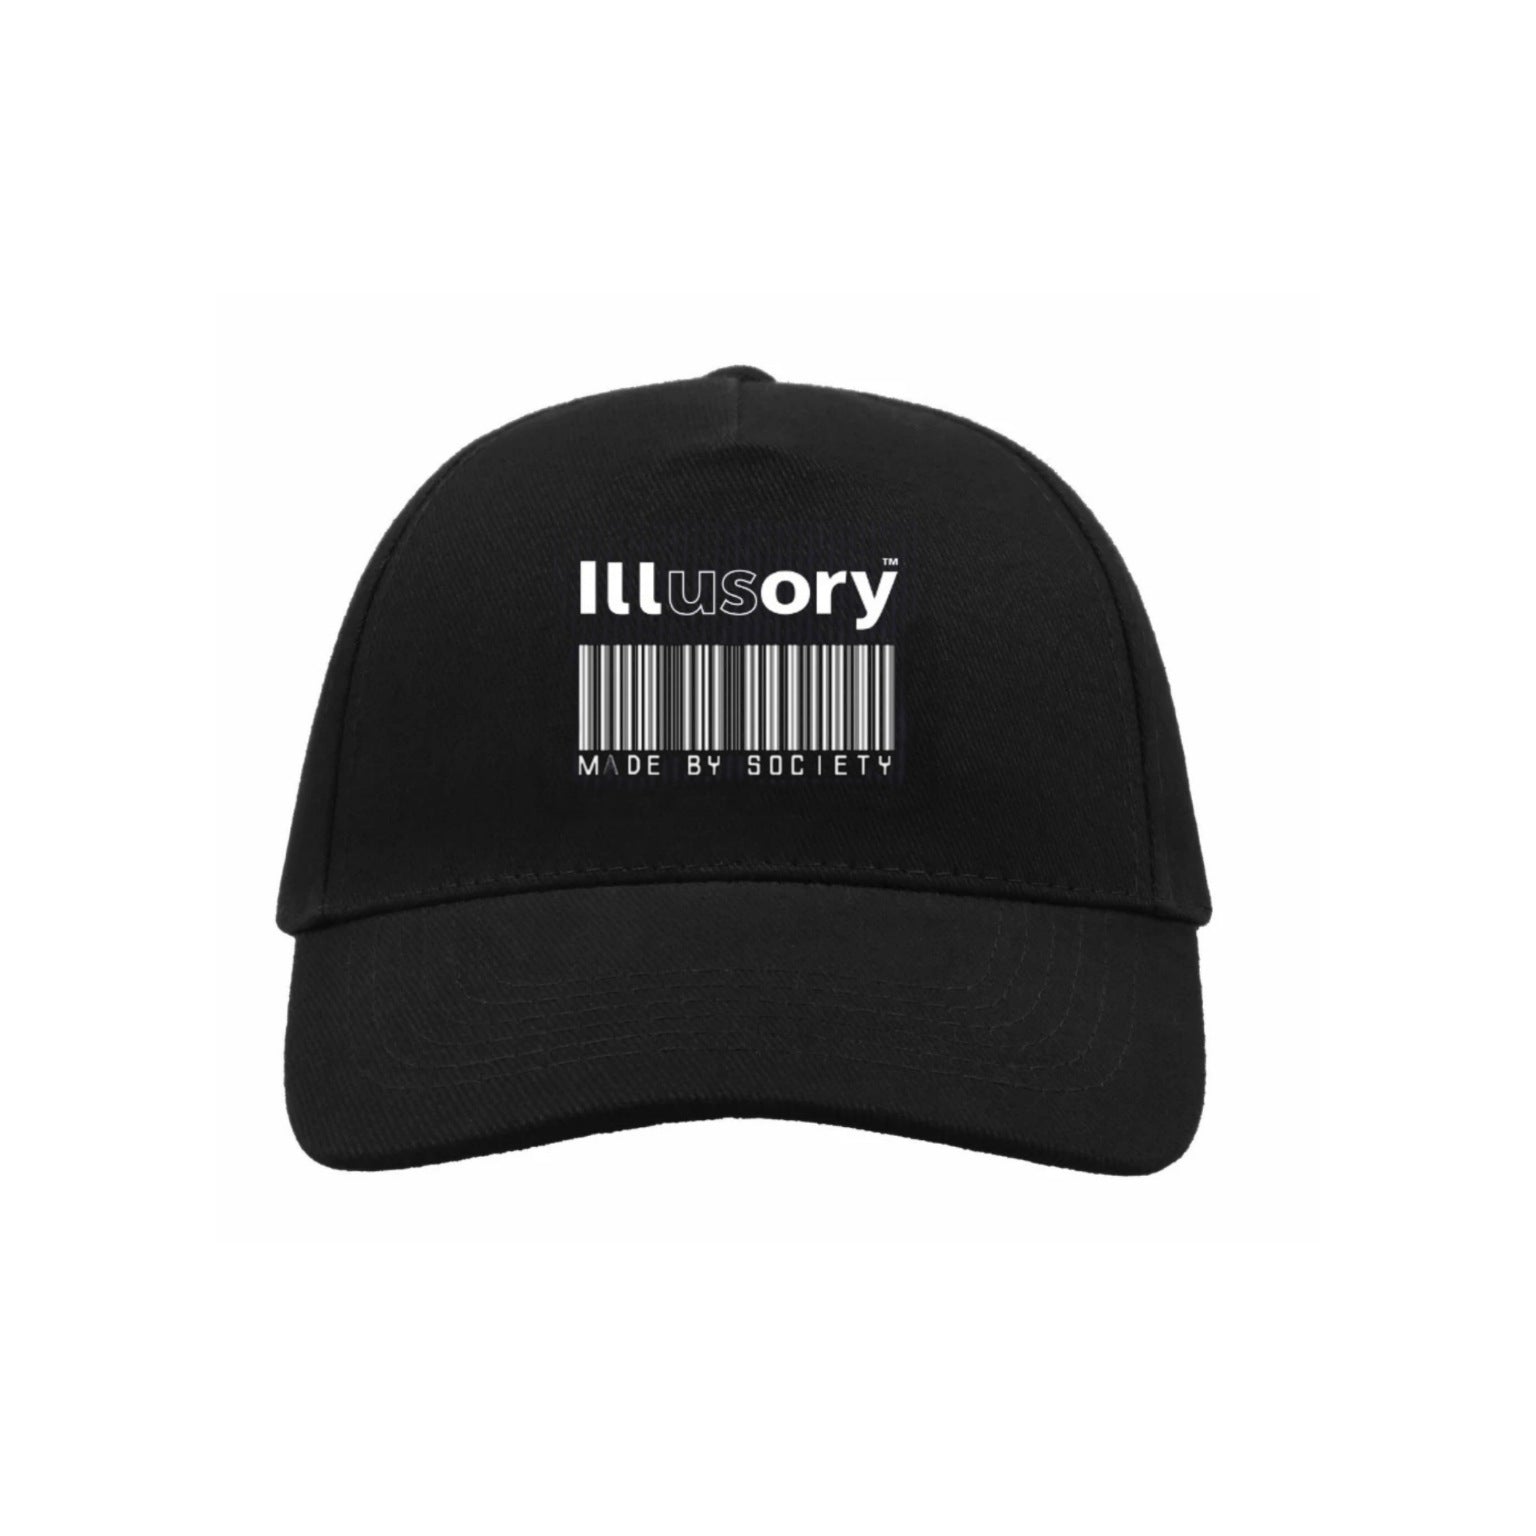 ILLUSORY "SOCIETY" HAT